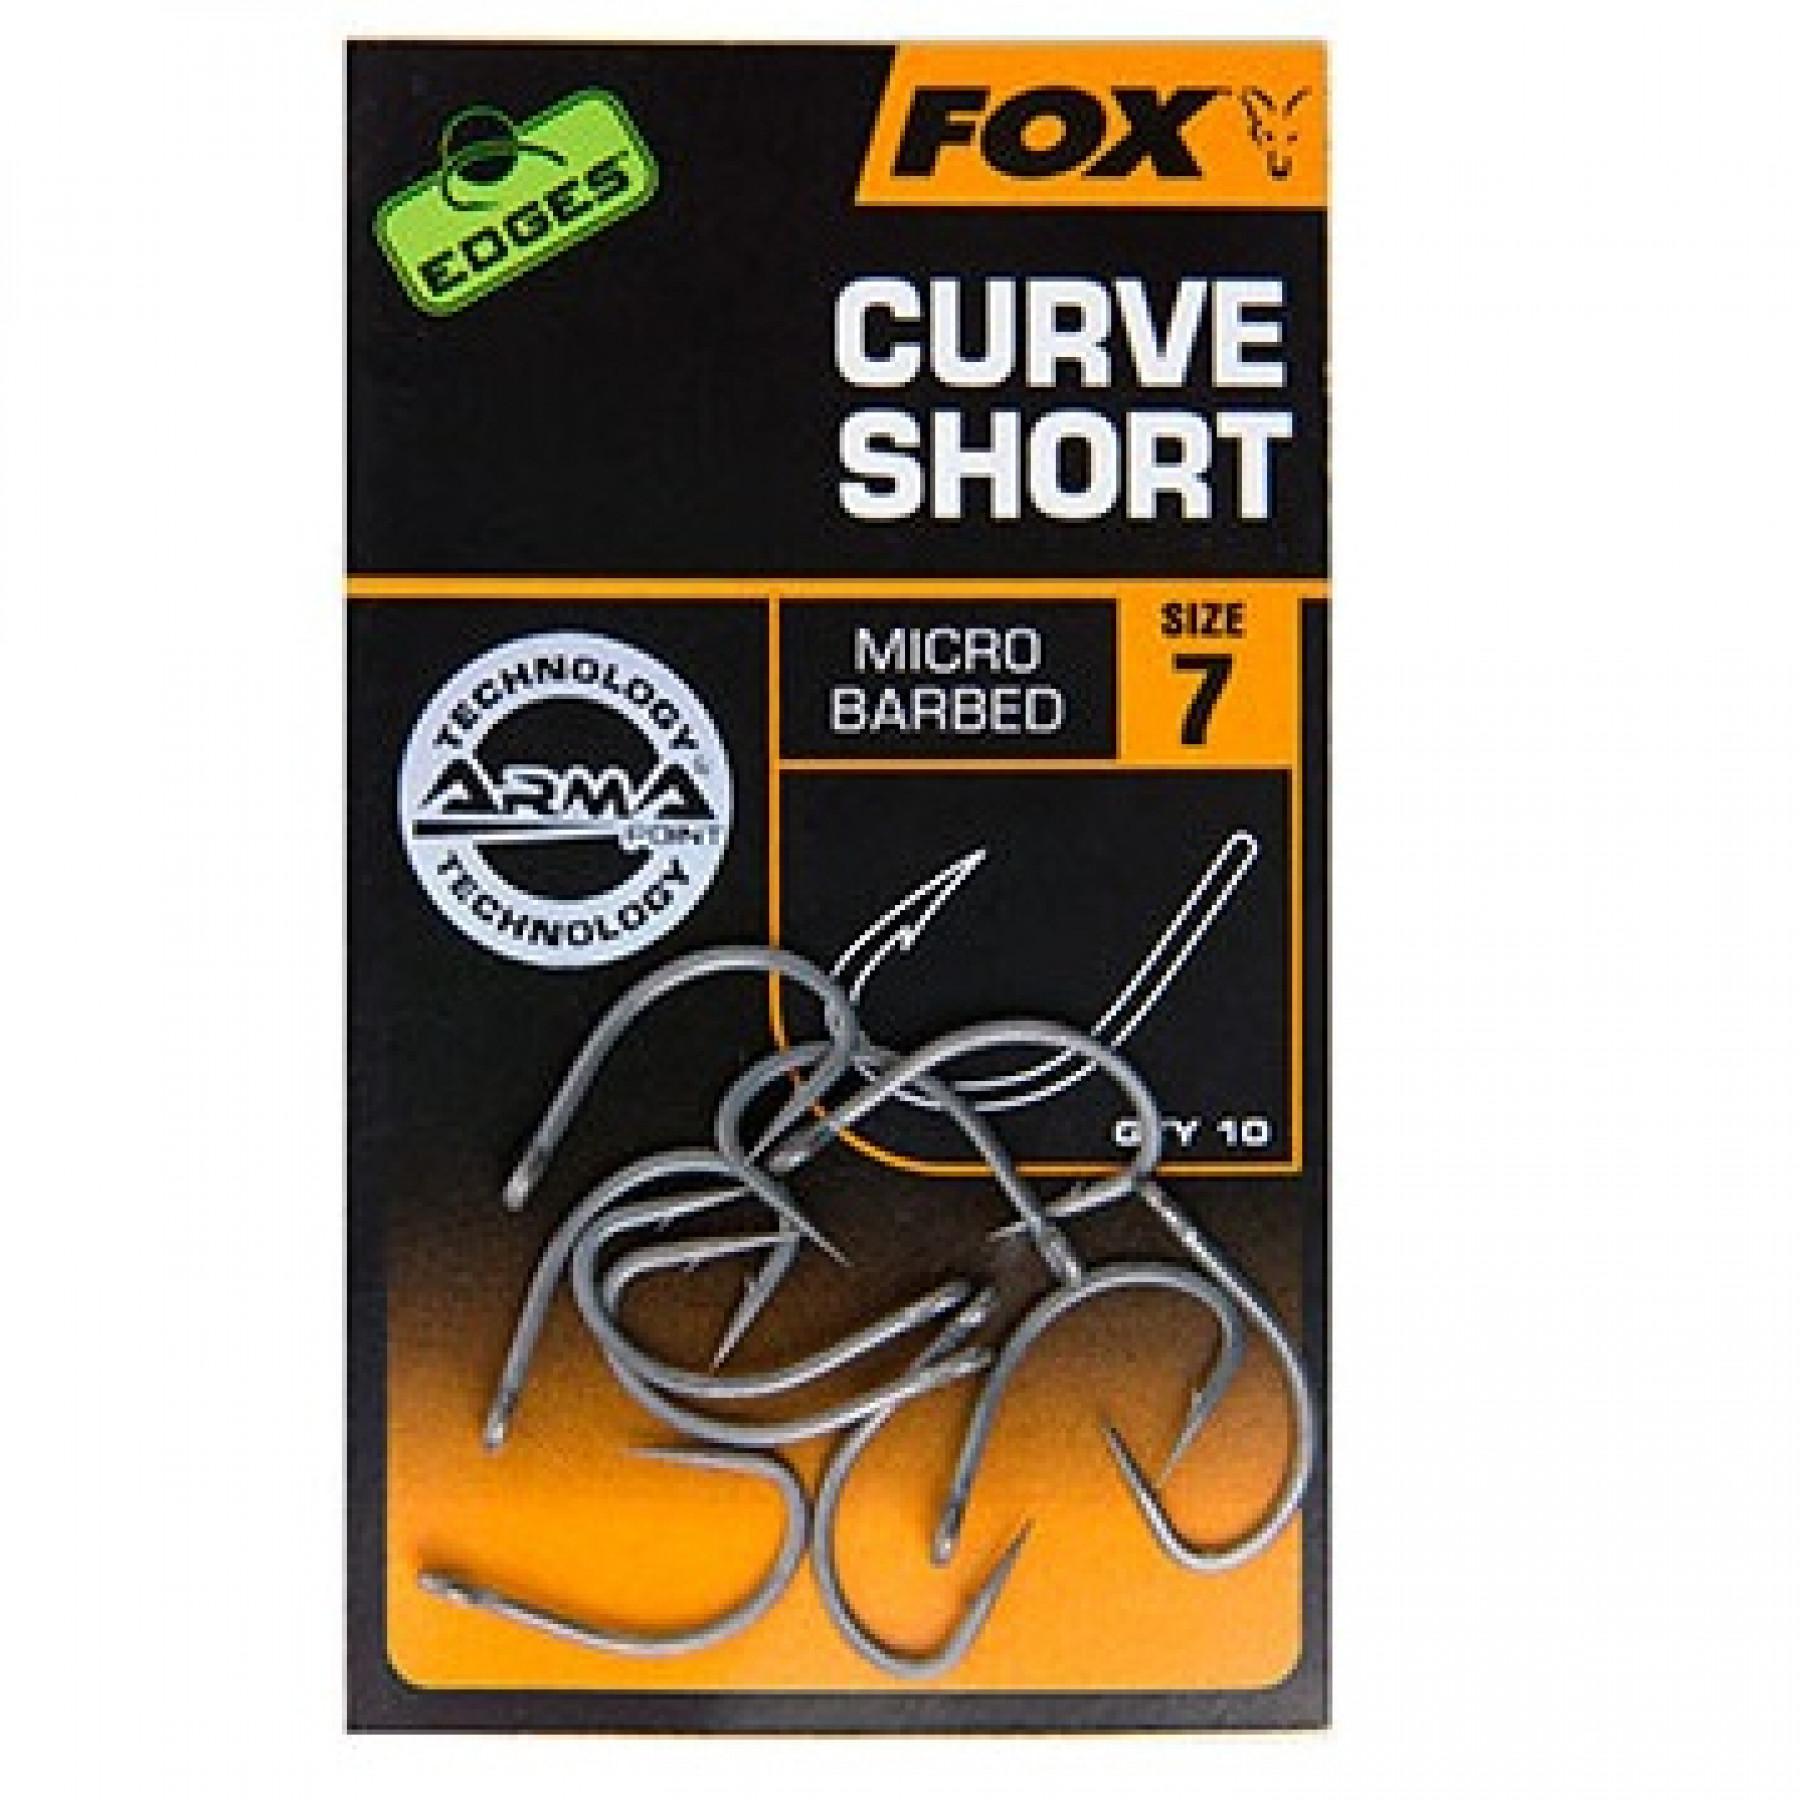 Gancho Fox Curve Short Edges taille 7